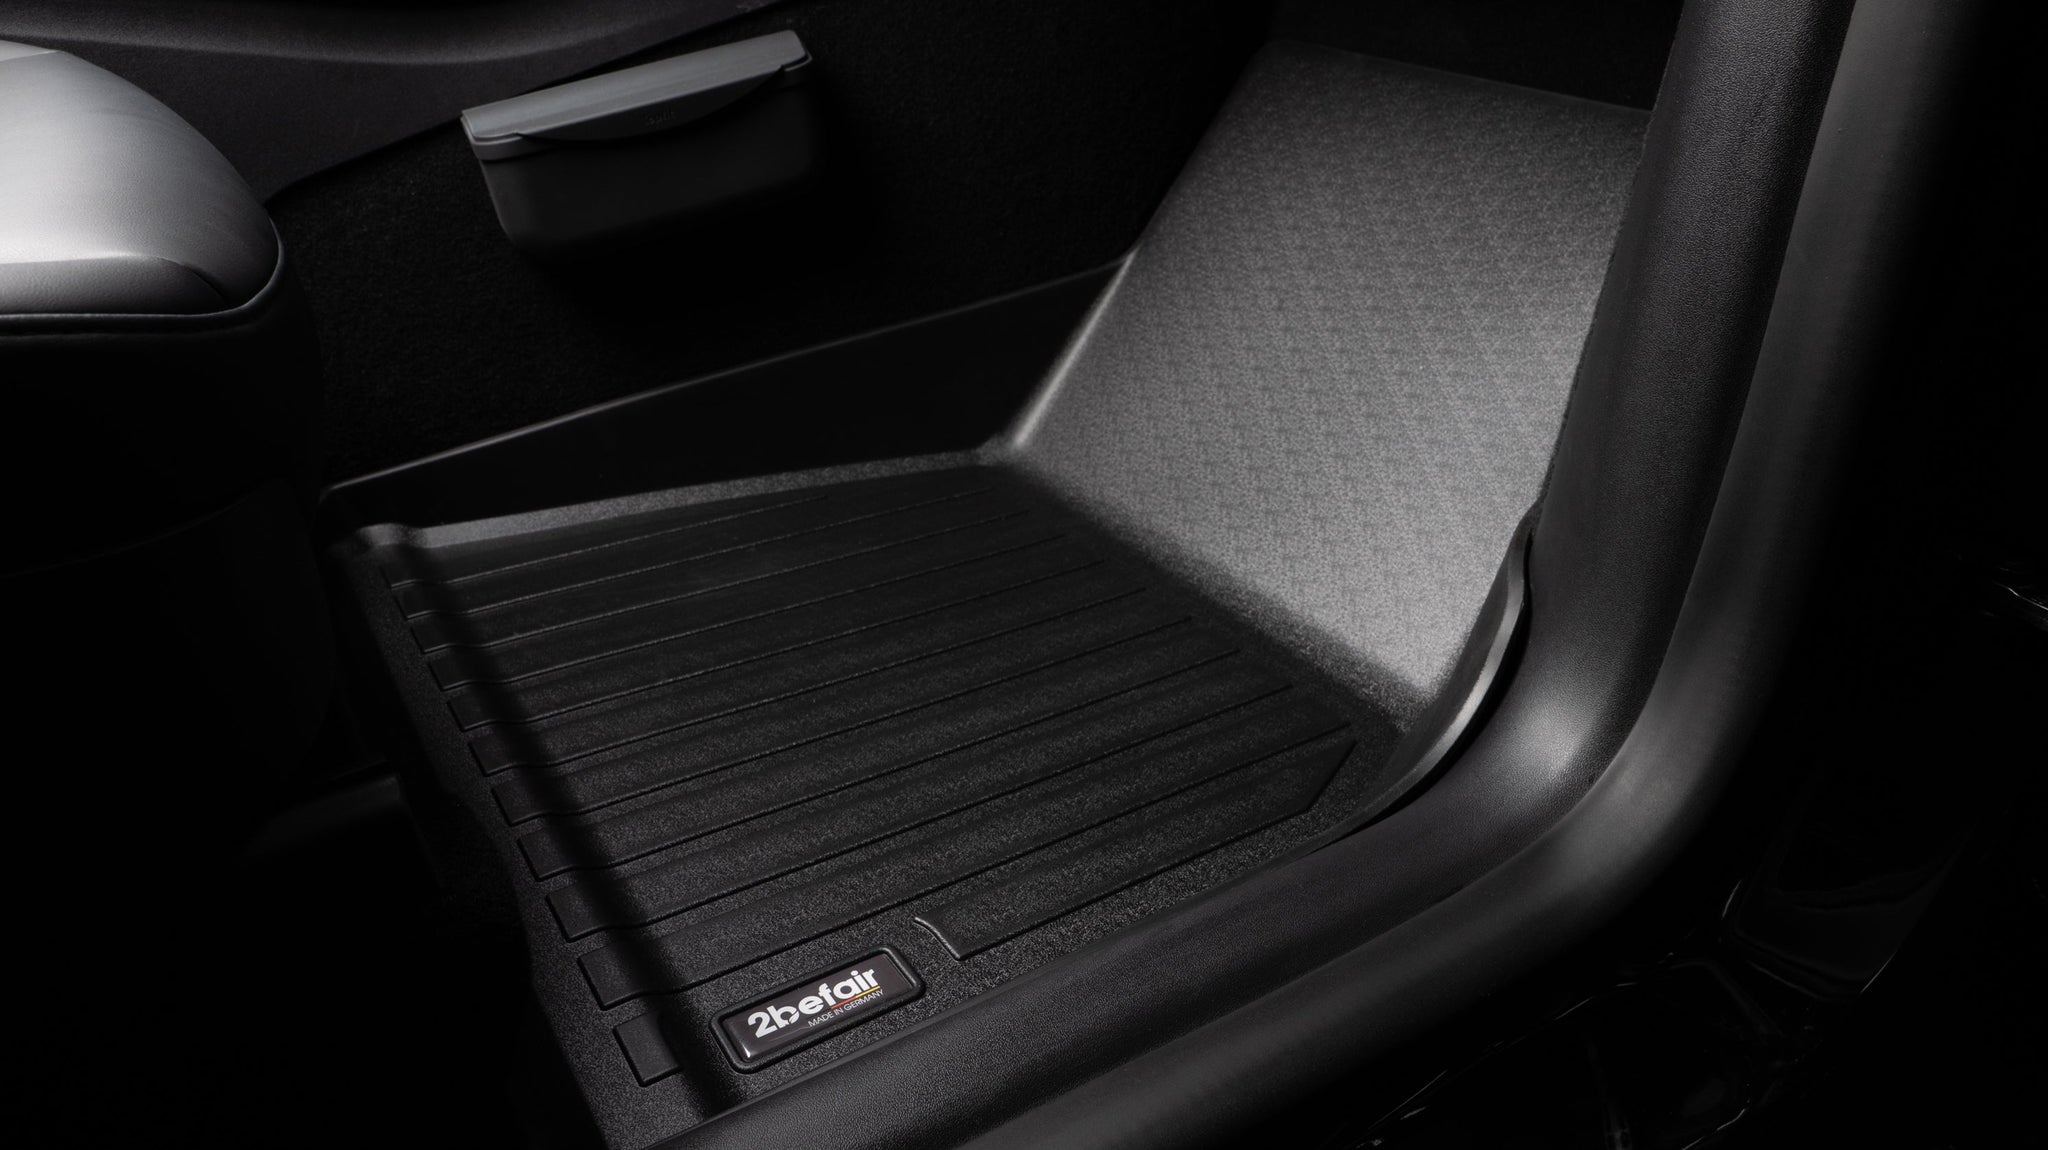 2befair rubber mats set interior for the Tesla Model Y